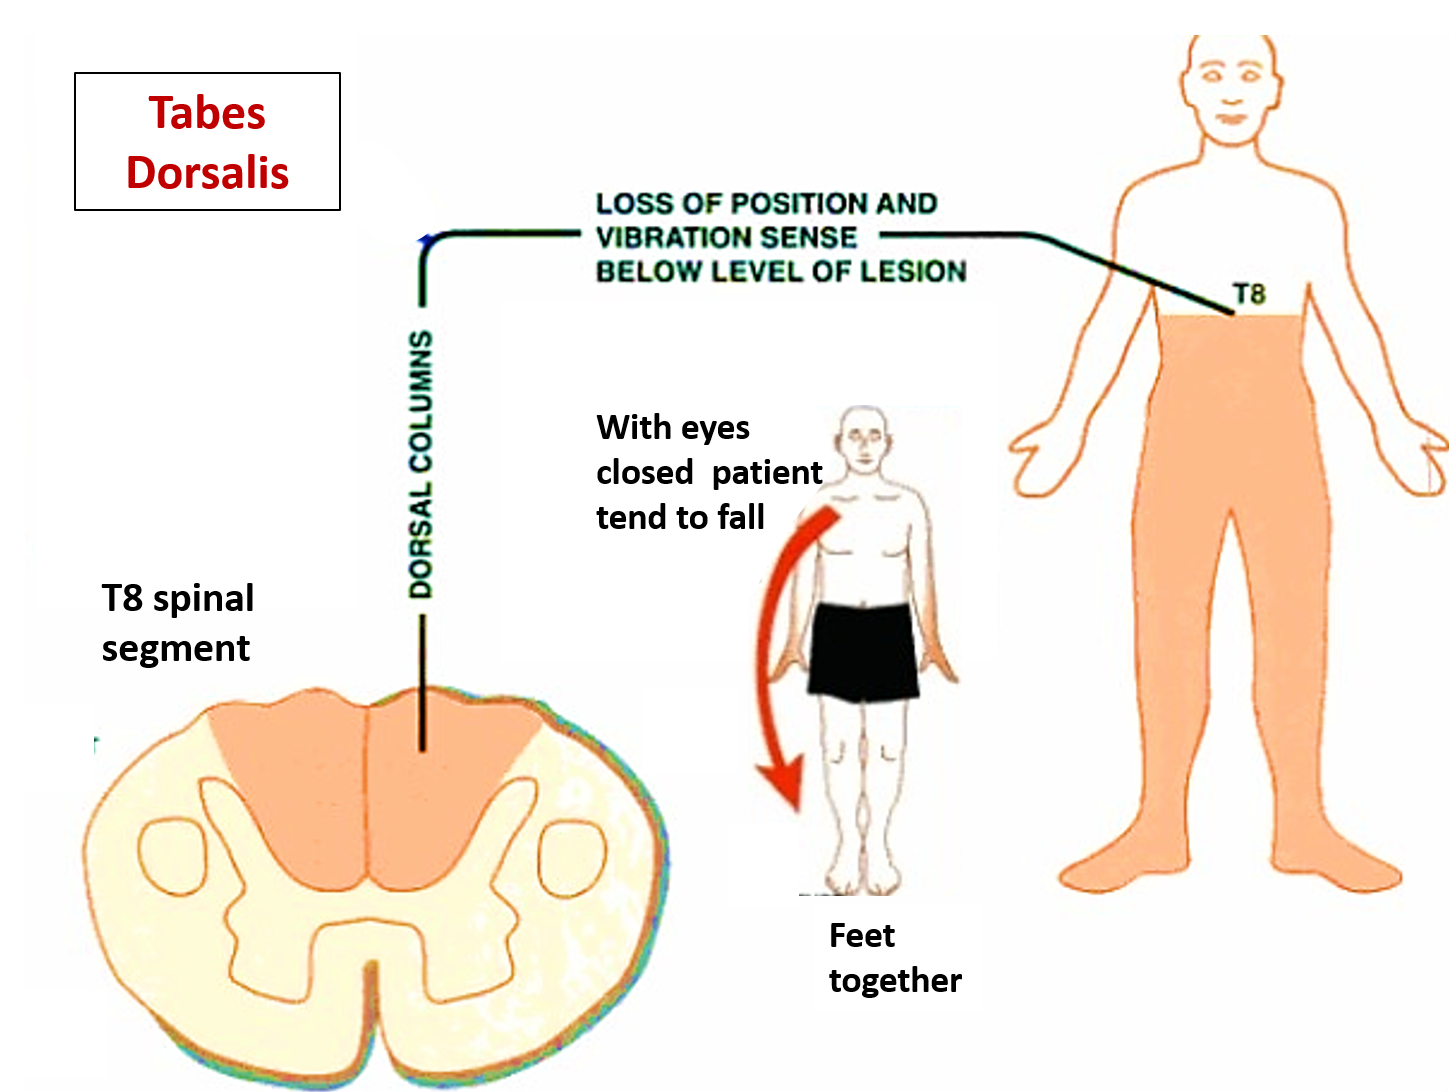 Tabes dorsalis- symptoms and anatomical basis